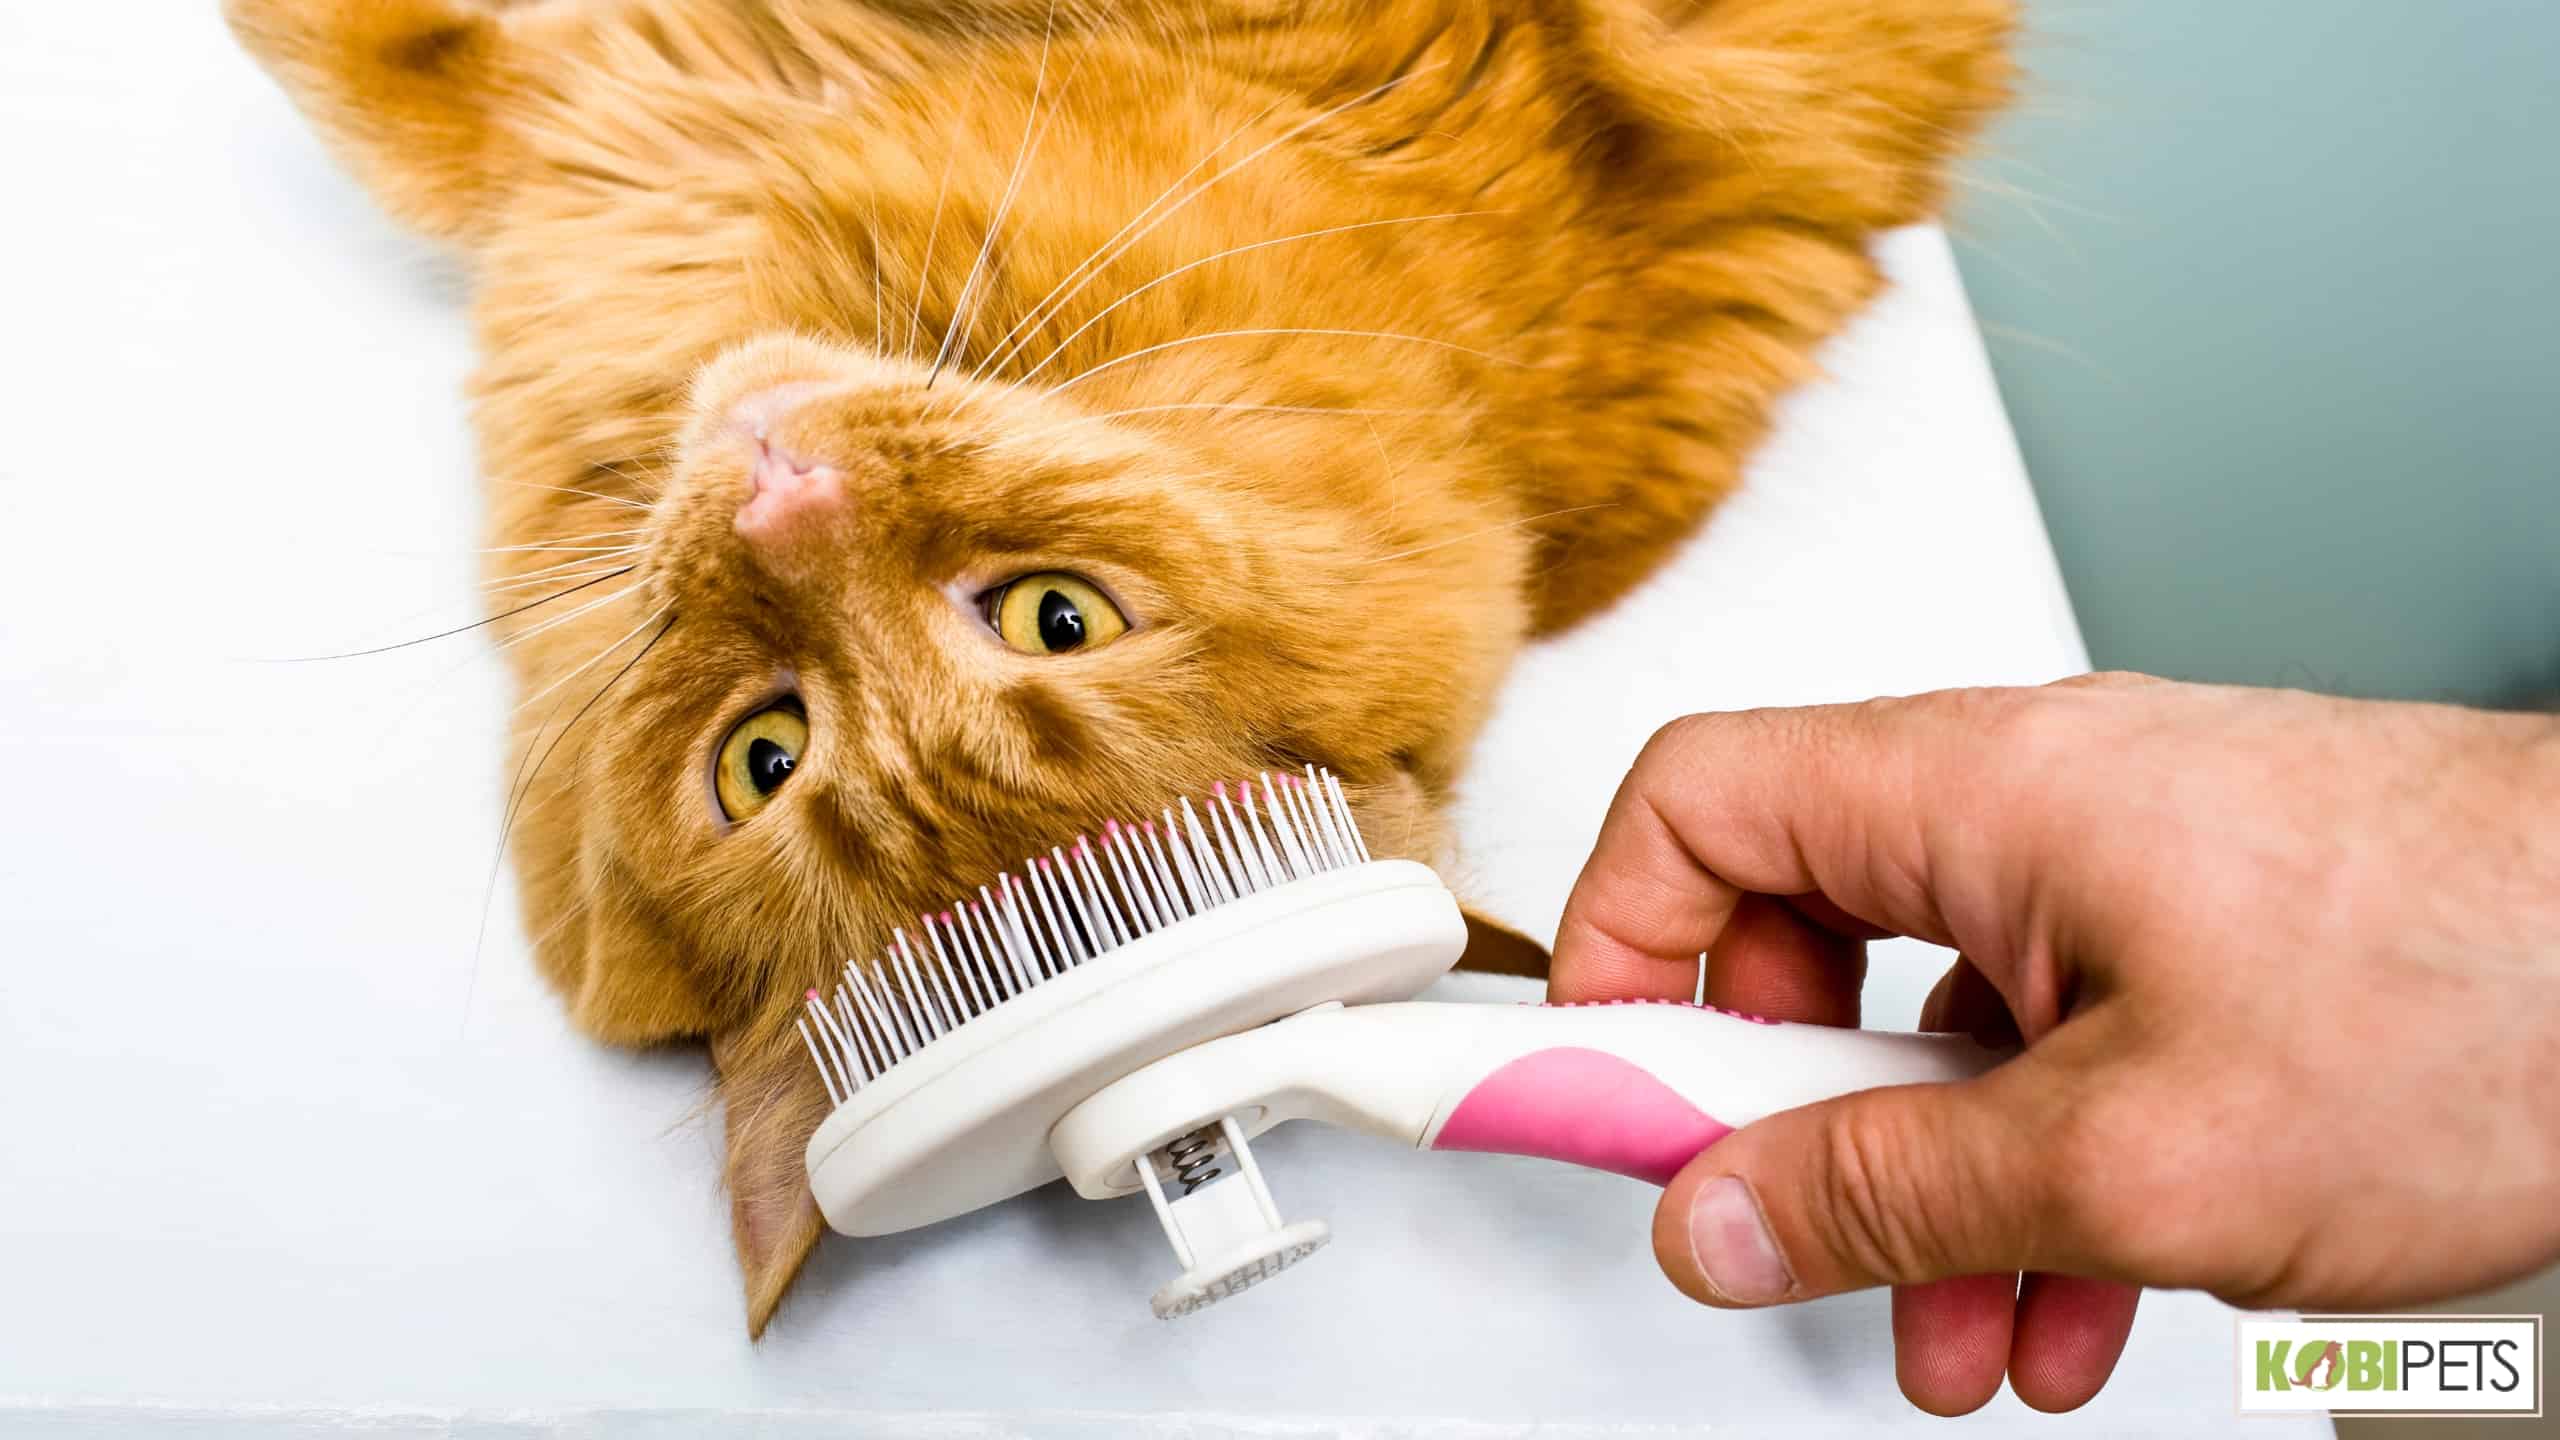 Benefits of Grooming Your Cat